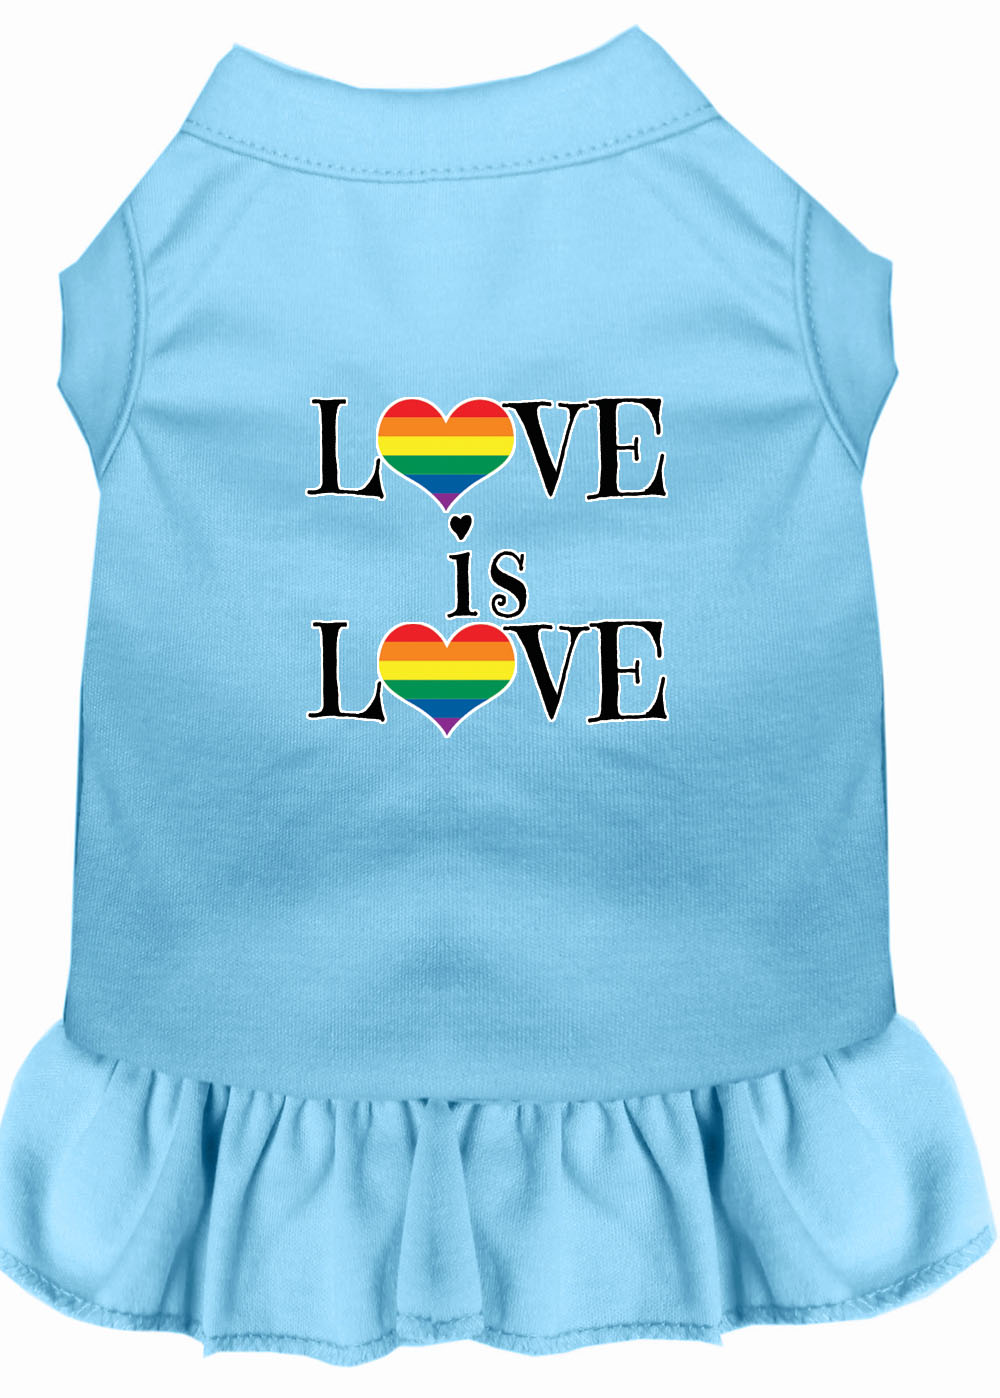 Love is Love Screen Print Dog Dress Baby Blue Med